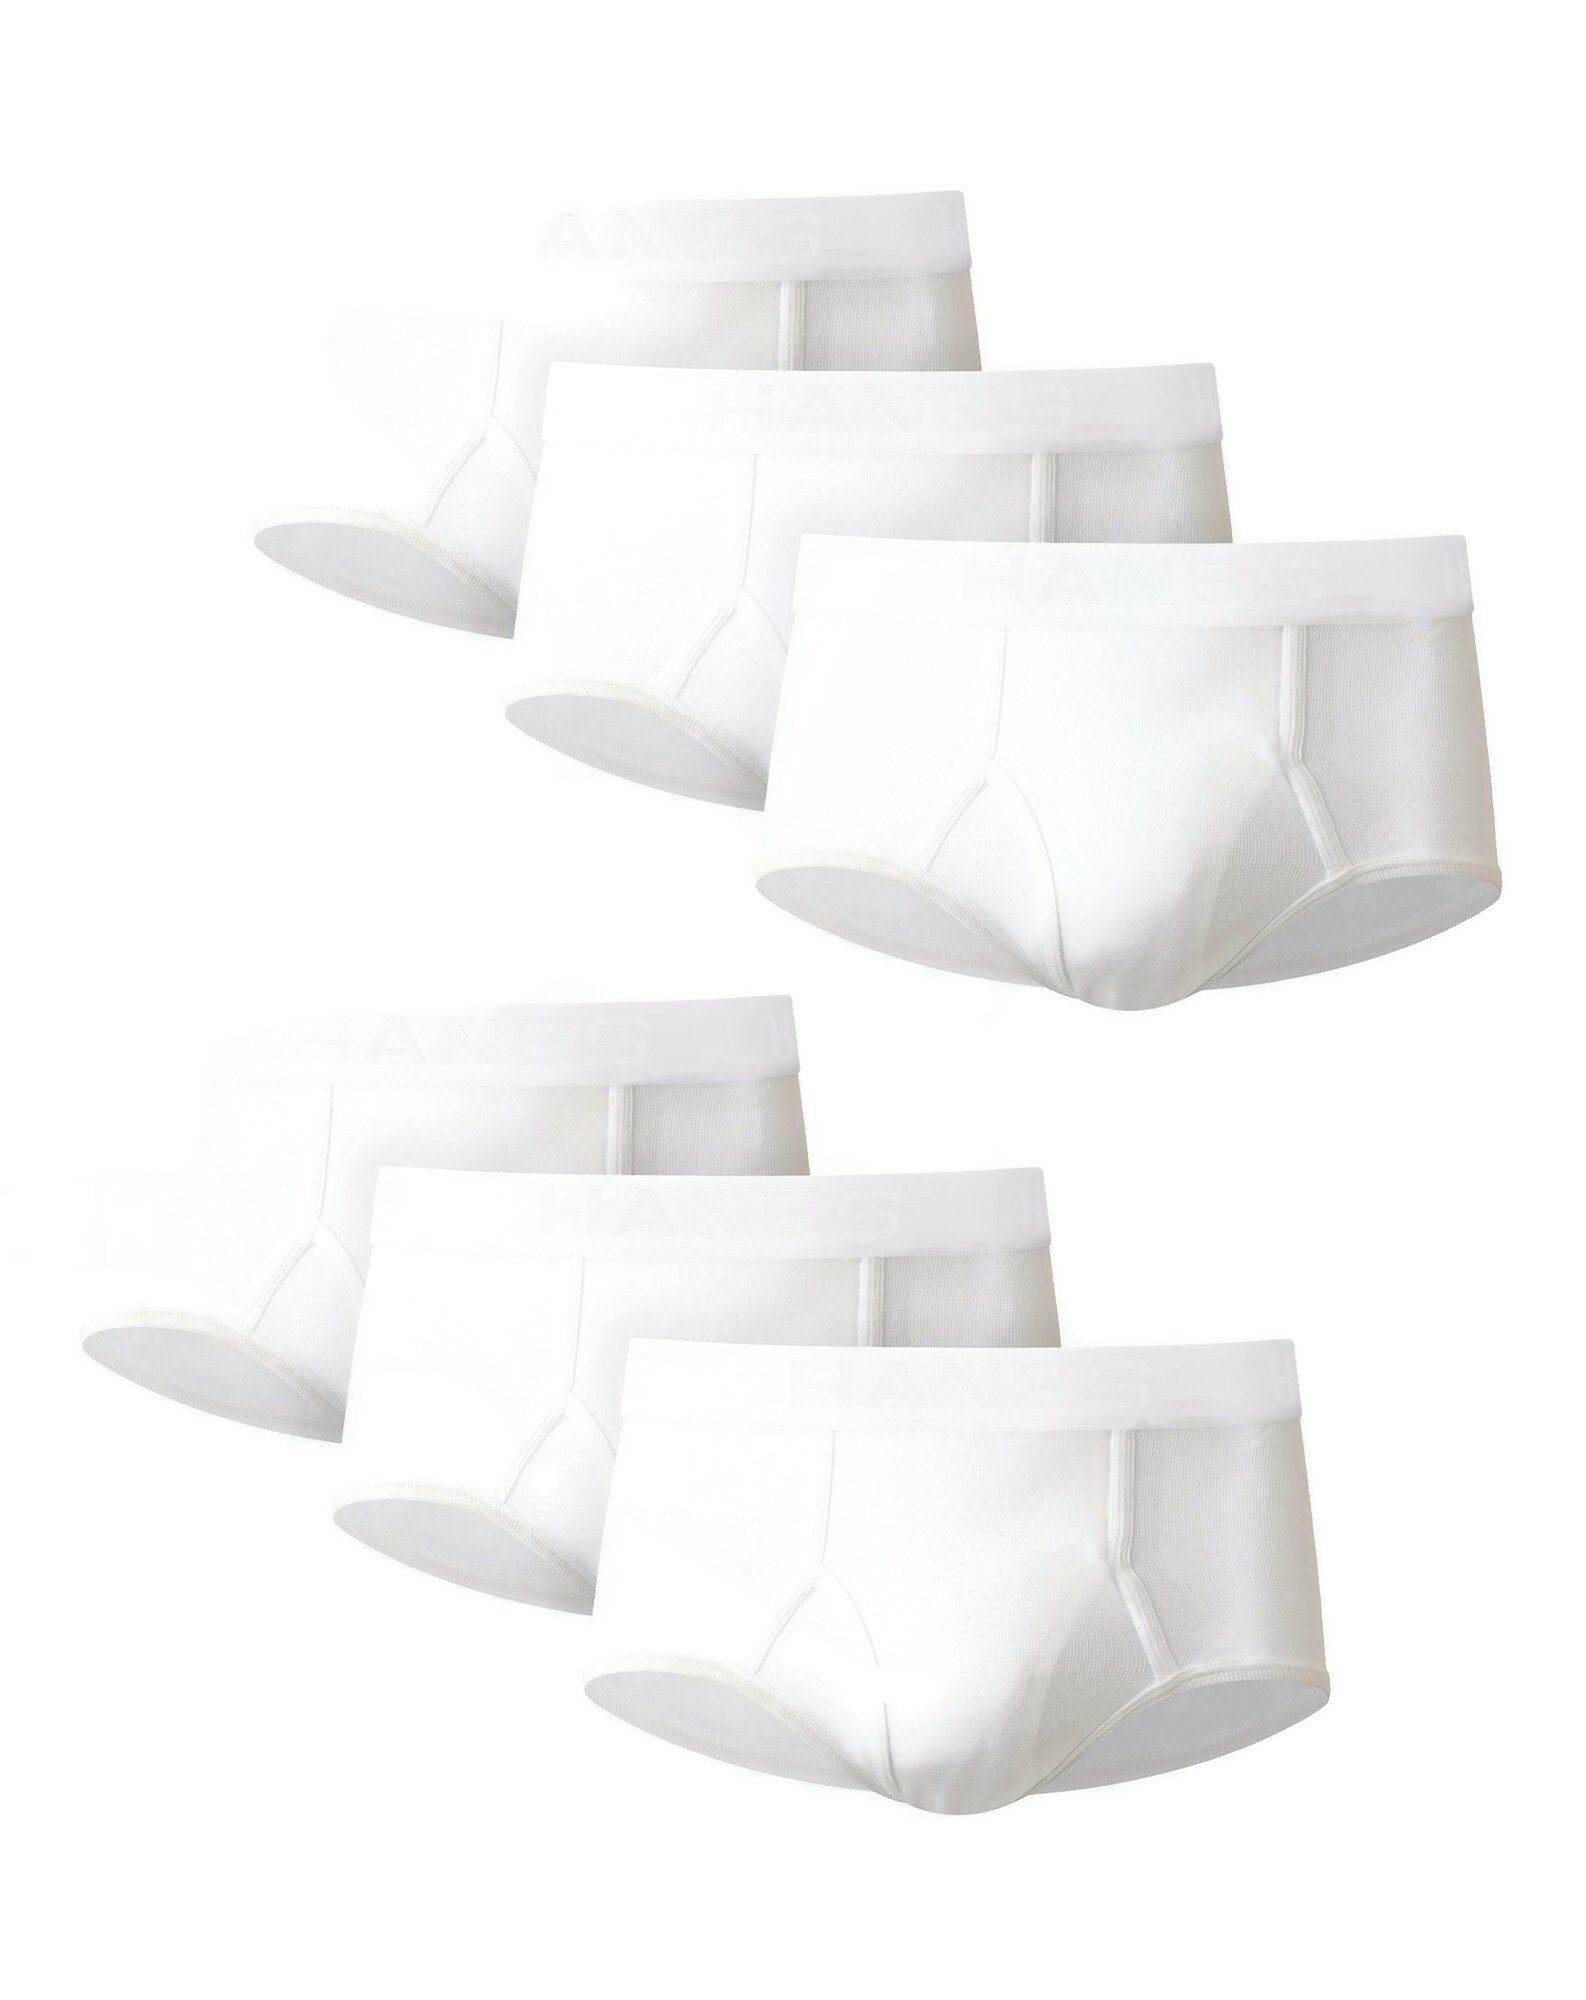 Hanes Ultimate Big Men's Cotton Briefs Underwear Pack, White, 6-Pack (Big & Tall Sizes)